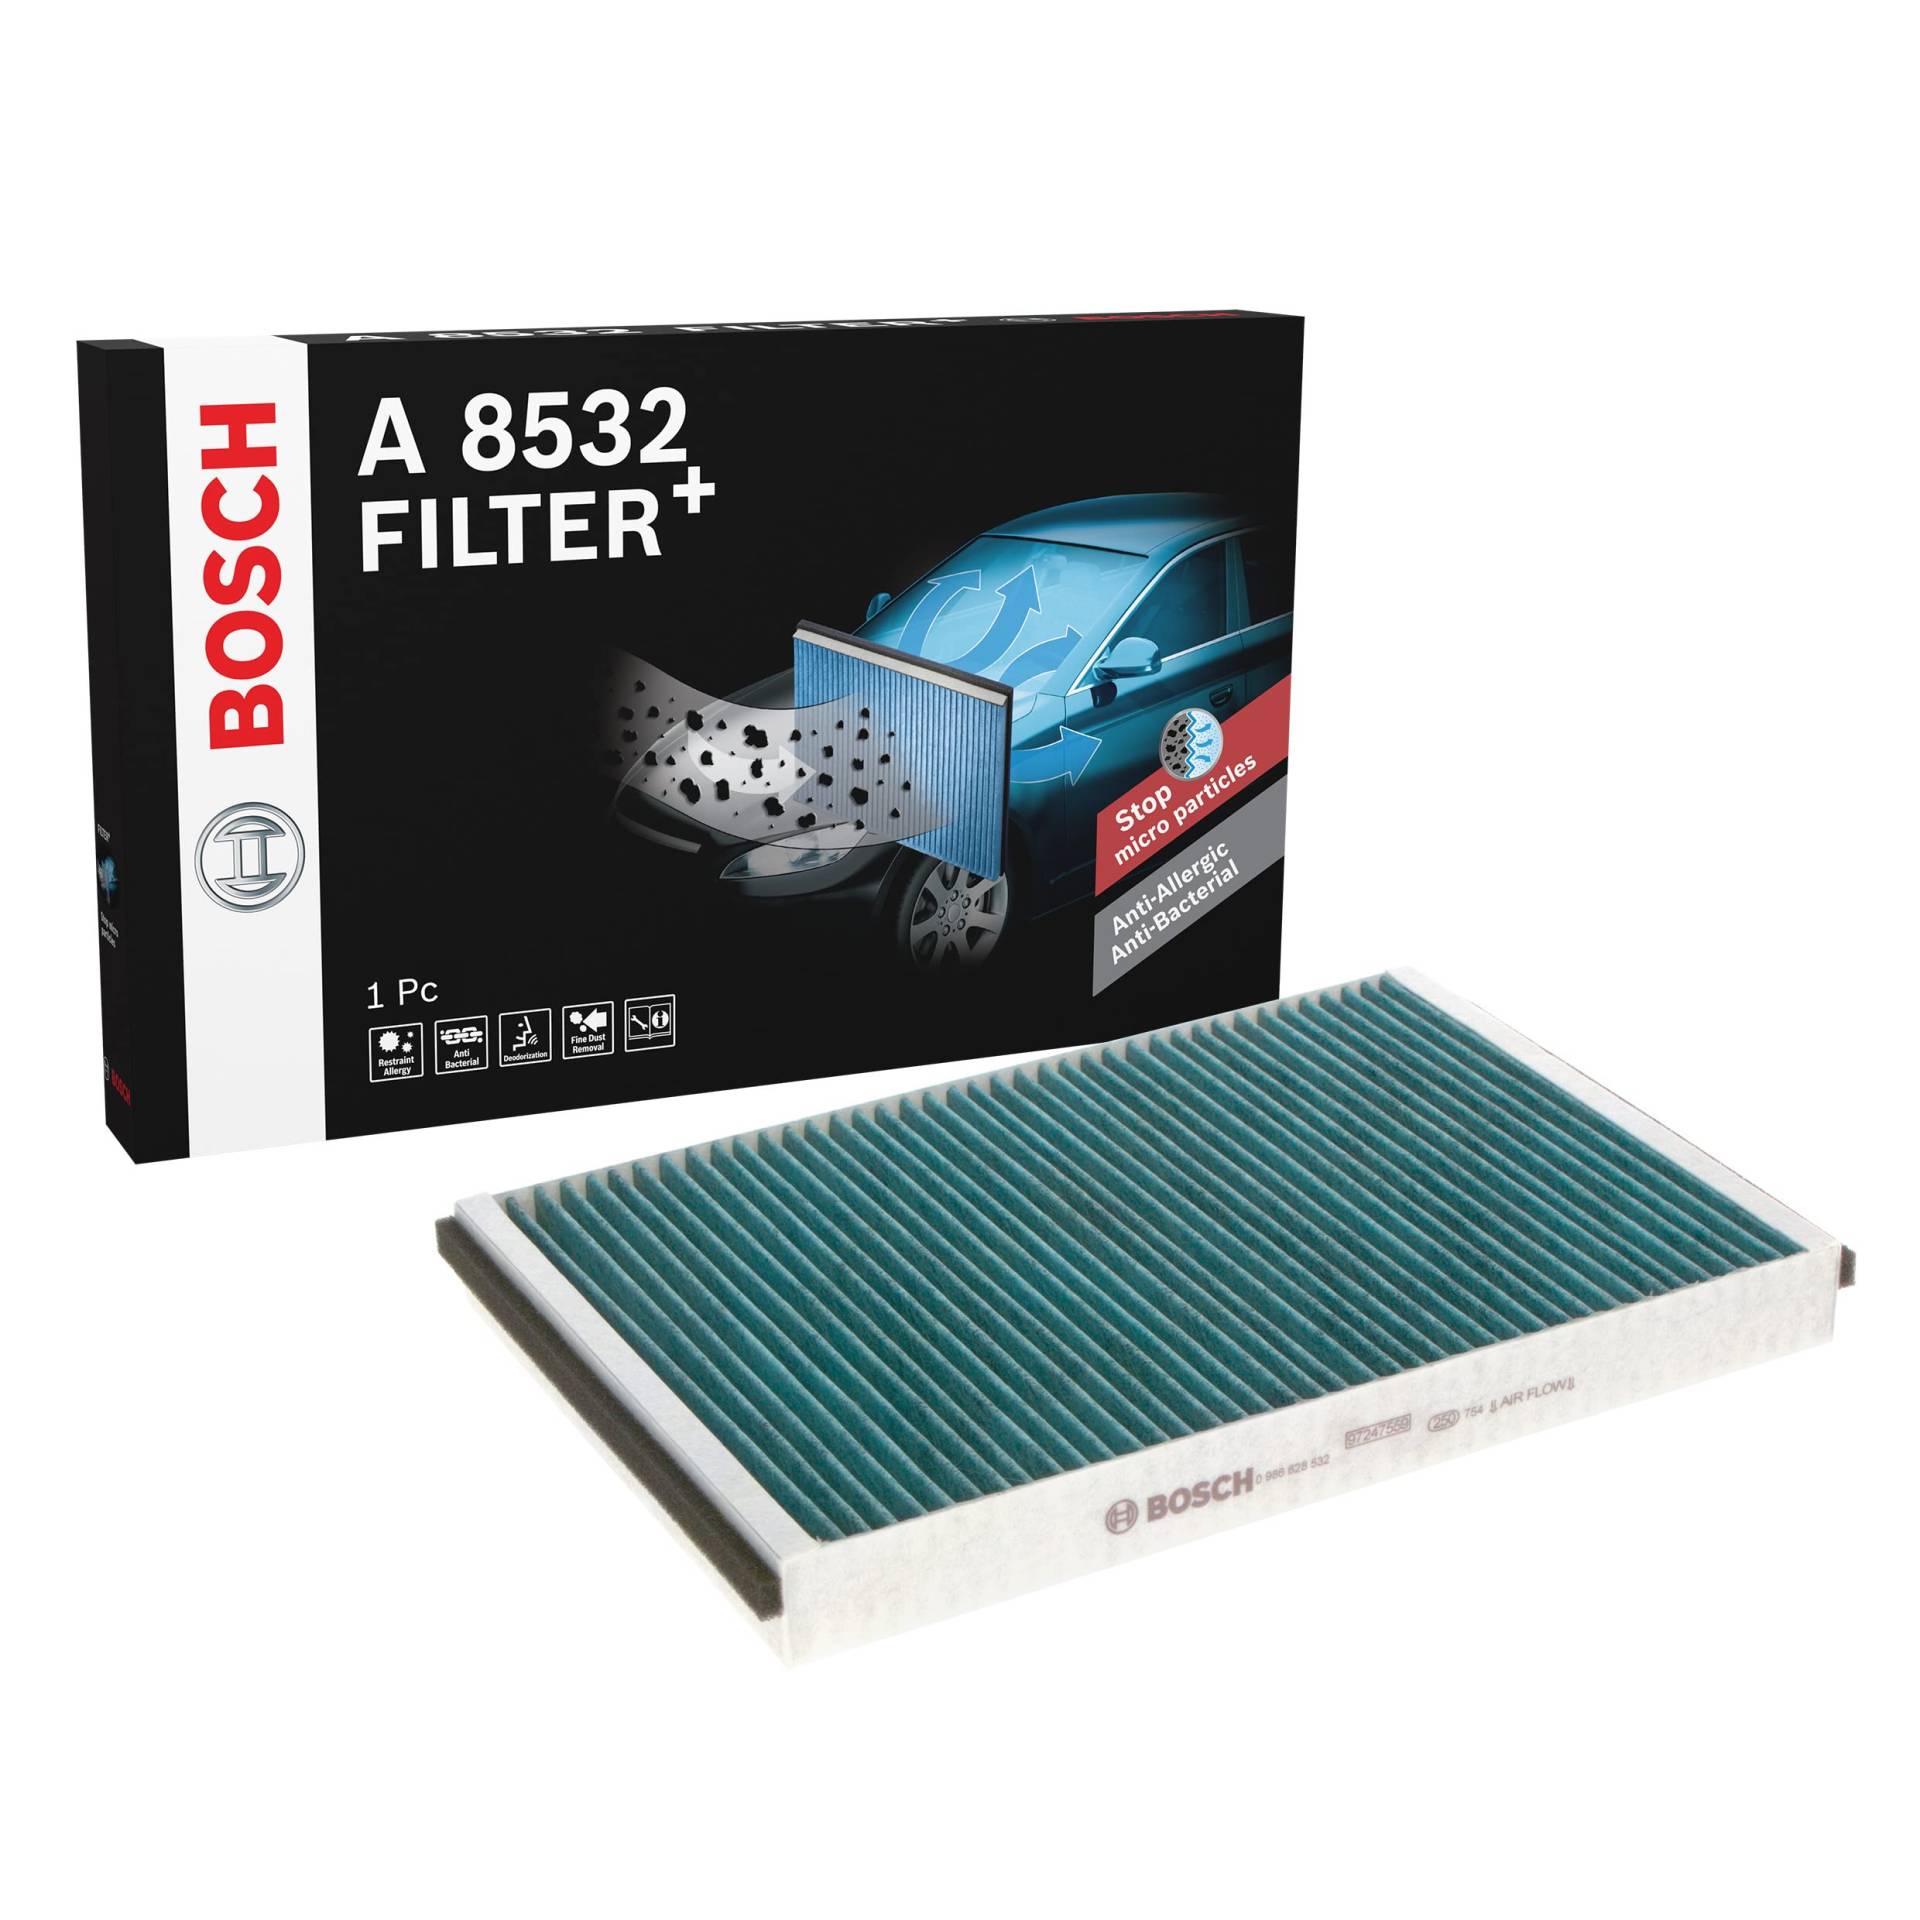 Bosch A8532 - Innenraumfilter Filter+ von Bosch Automotive